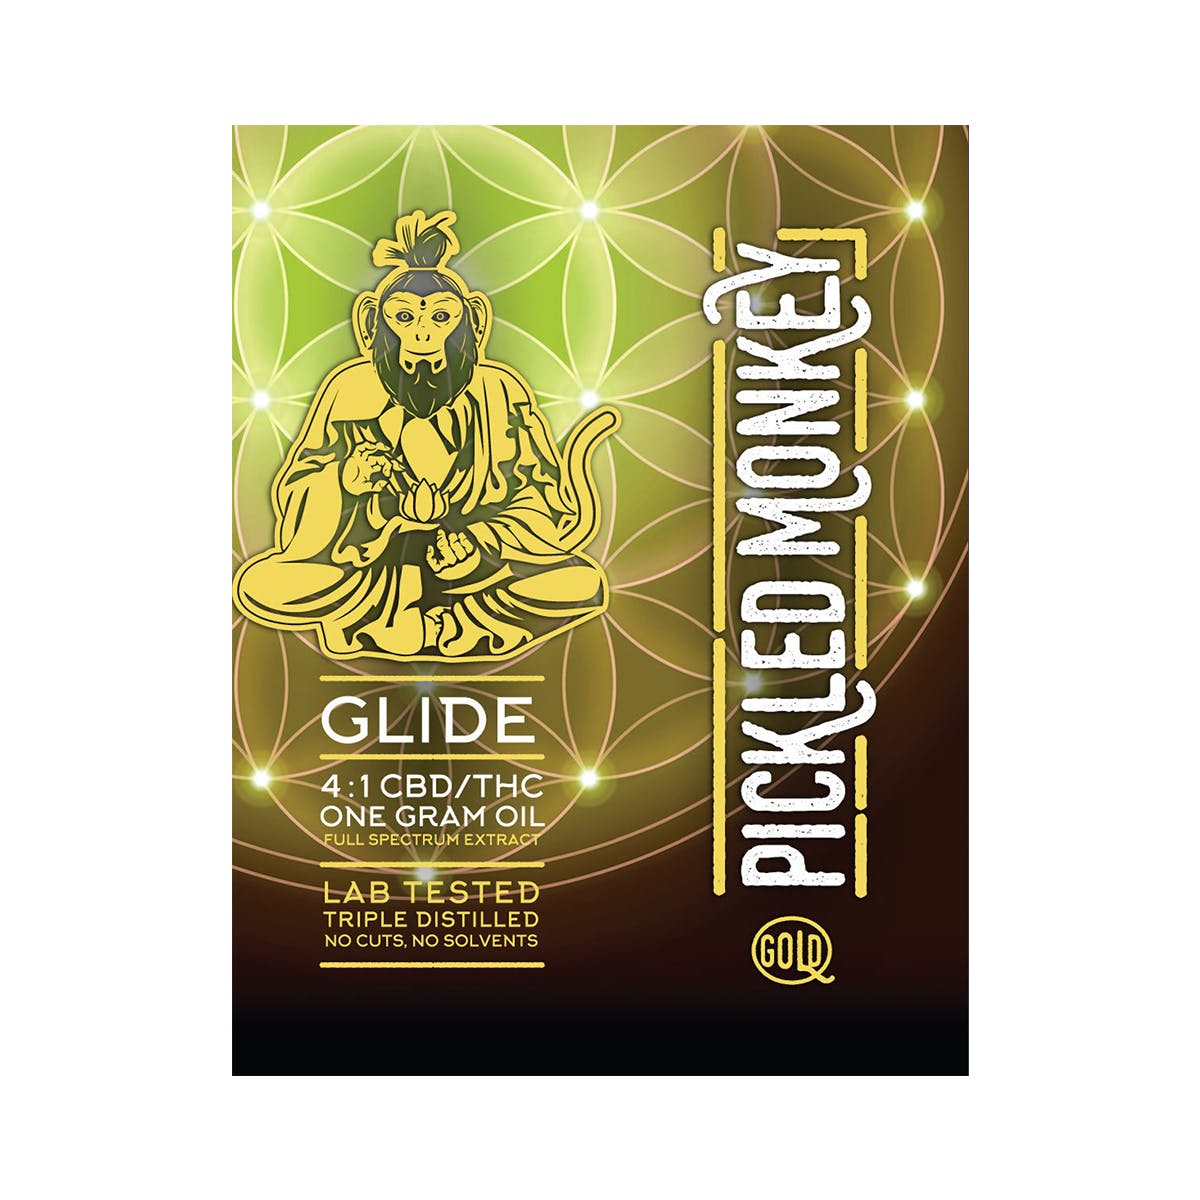 Pickled Monkey Gold: GLIDE